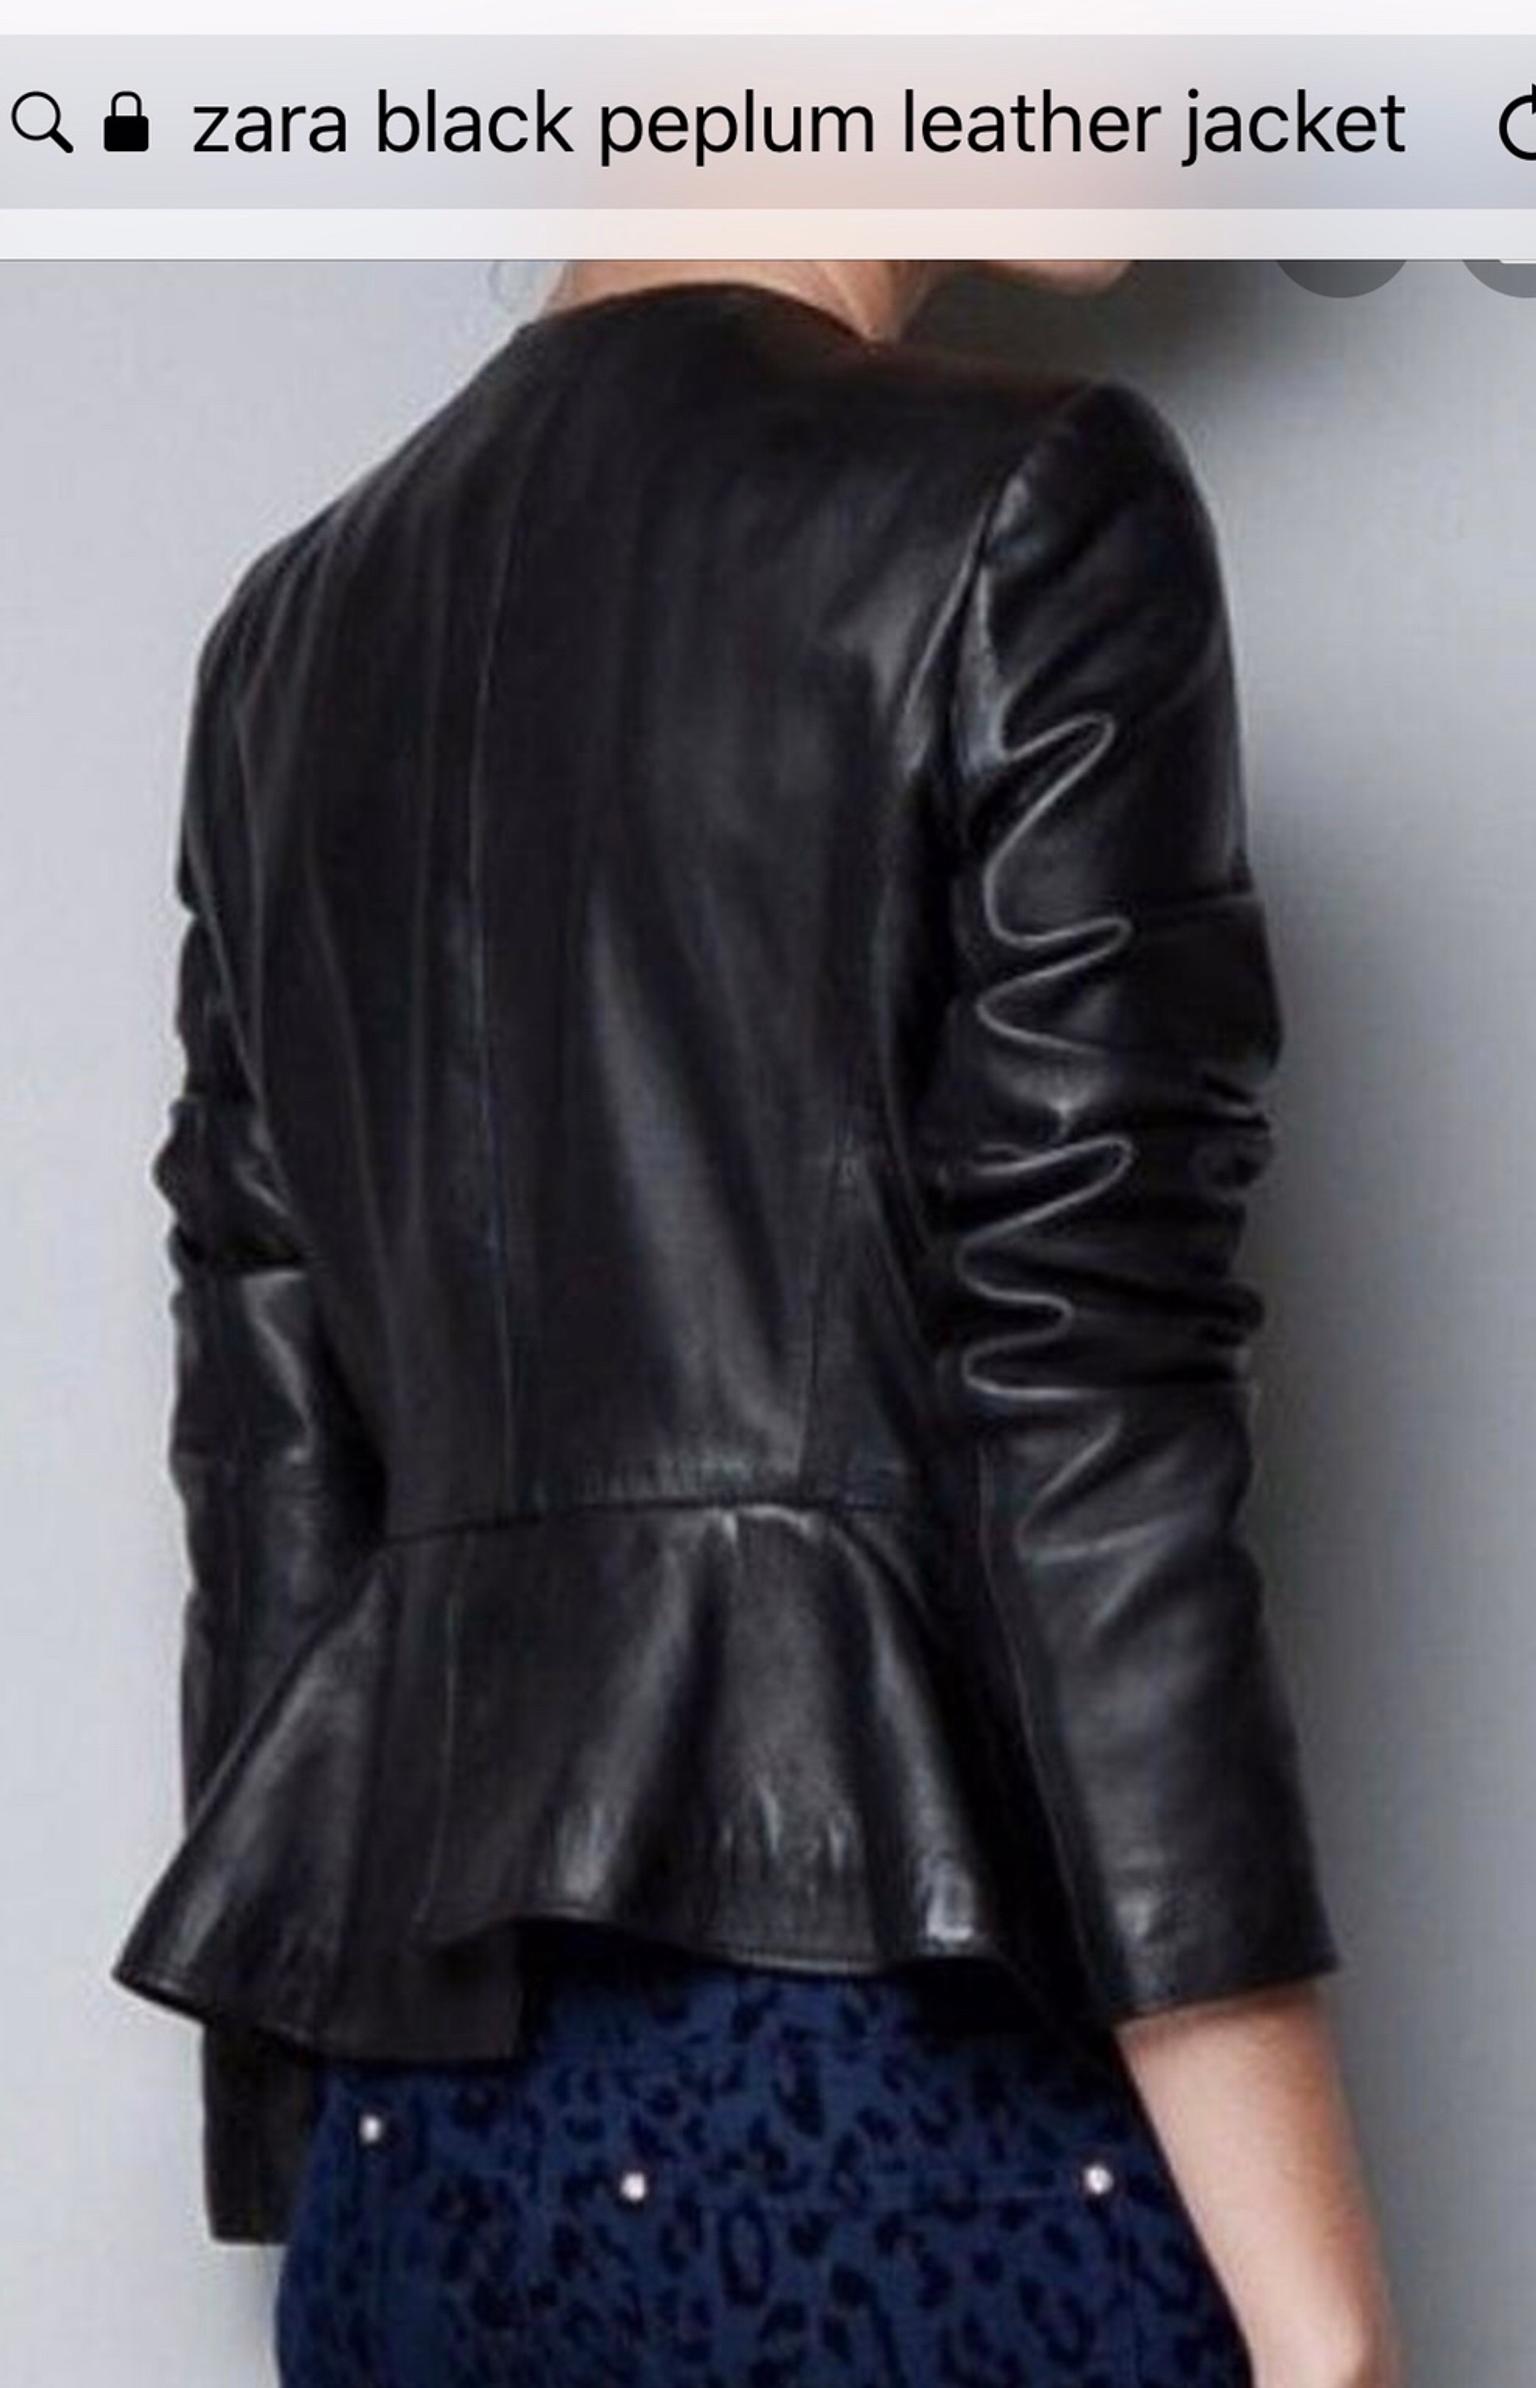 peplum leather jacket zara